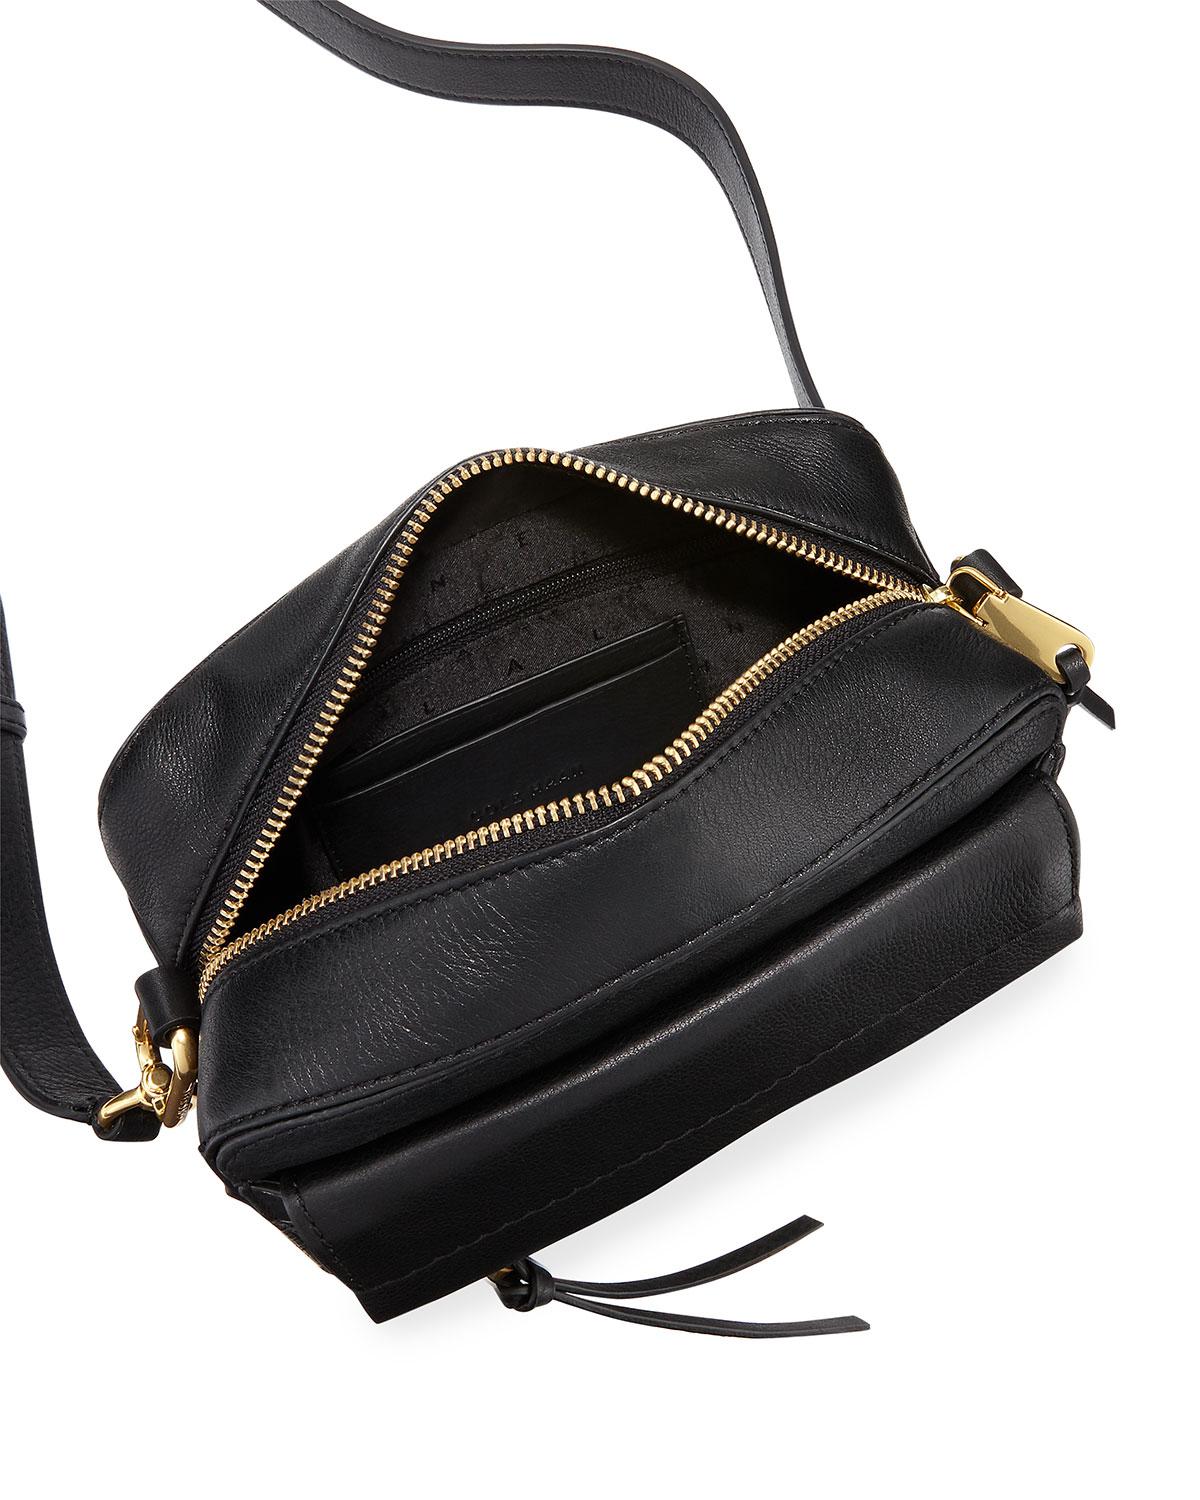 Cole Haan Kathlyn Leather Camera Crossbody Bag in Black - Lyst